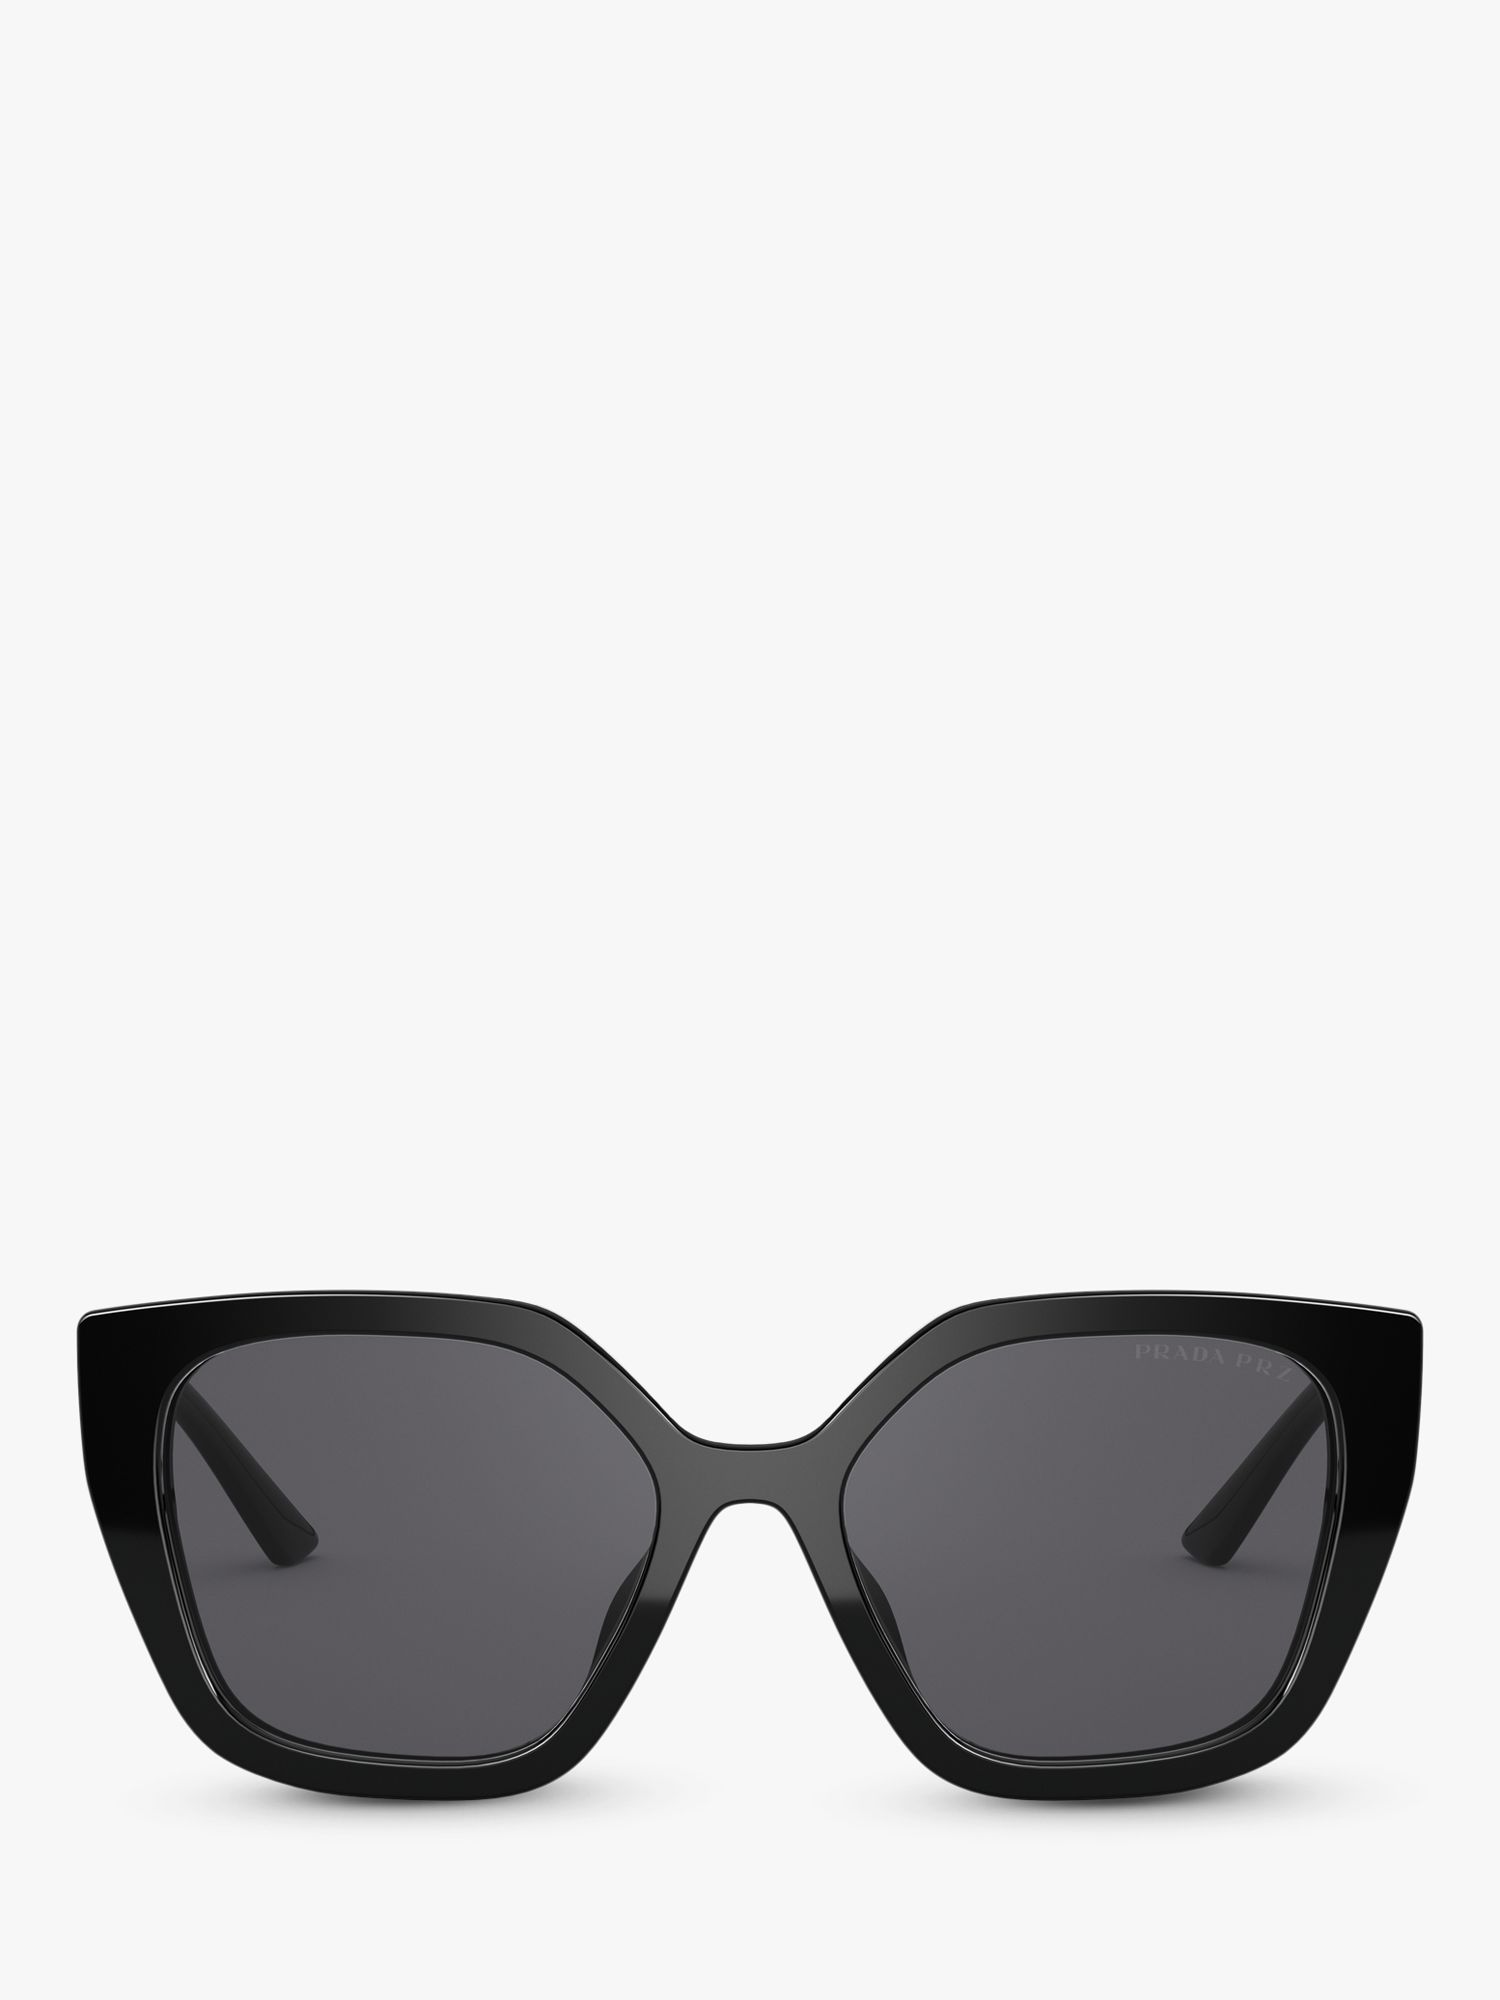 Prada PR 24XS Women's Polarised Square Sunglasses, Black/Grey at John Lewis & Partners